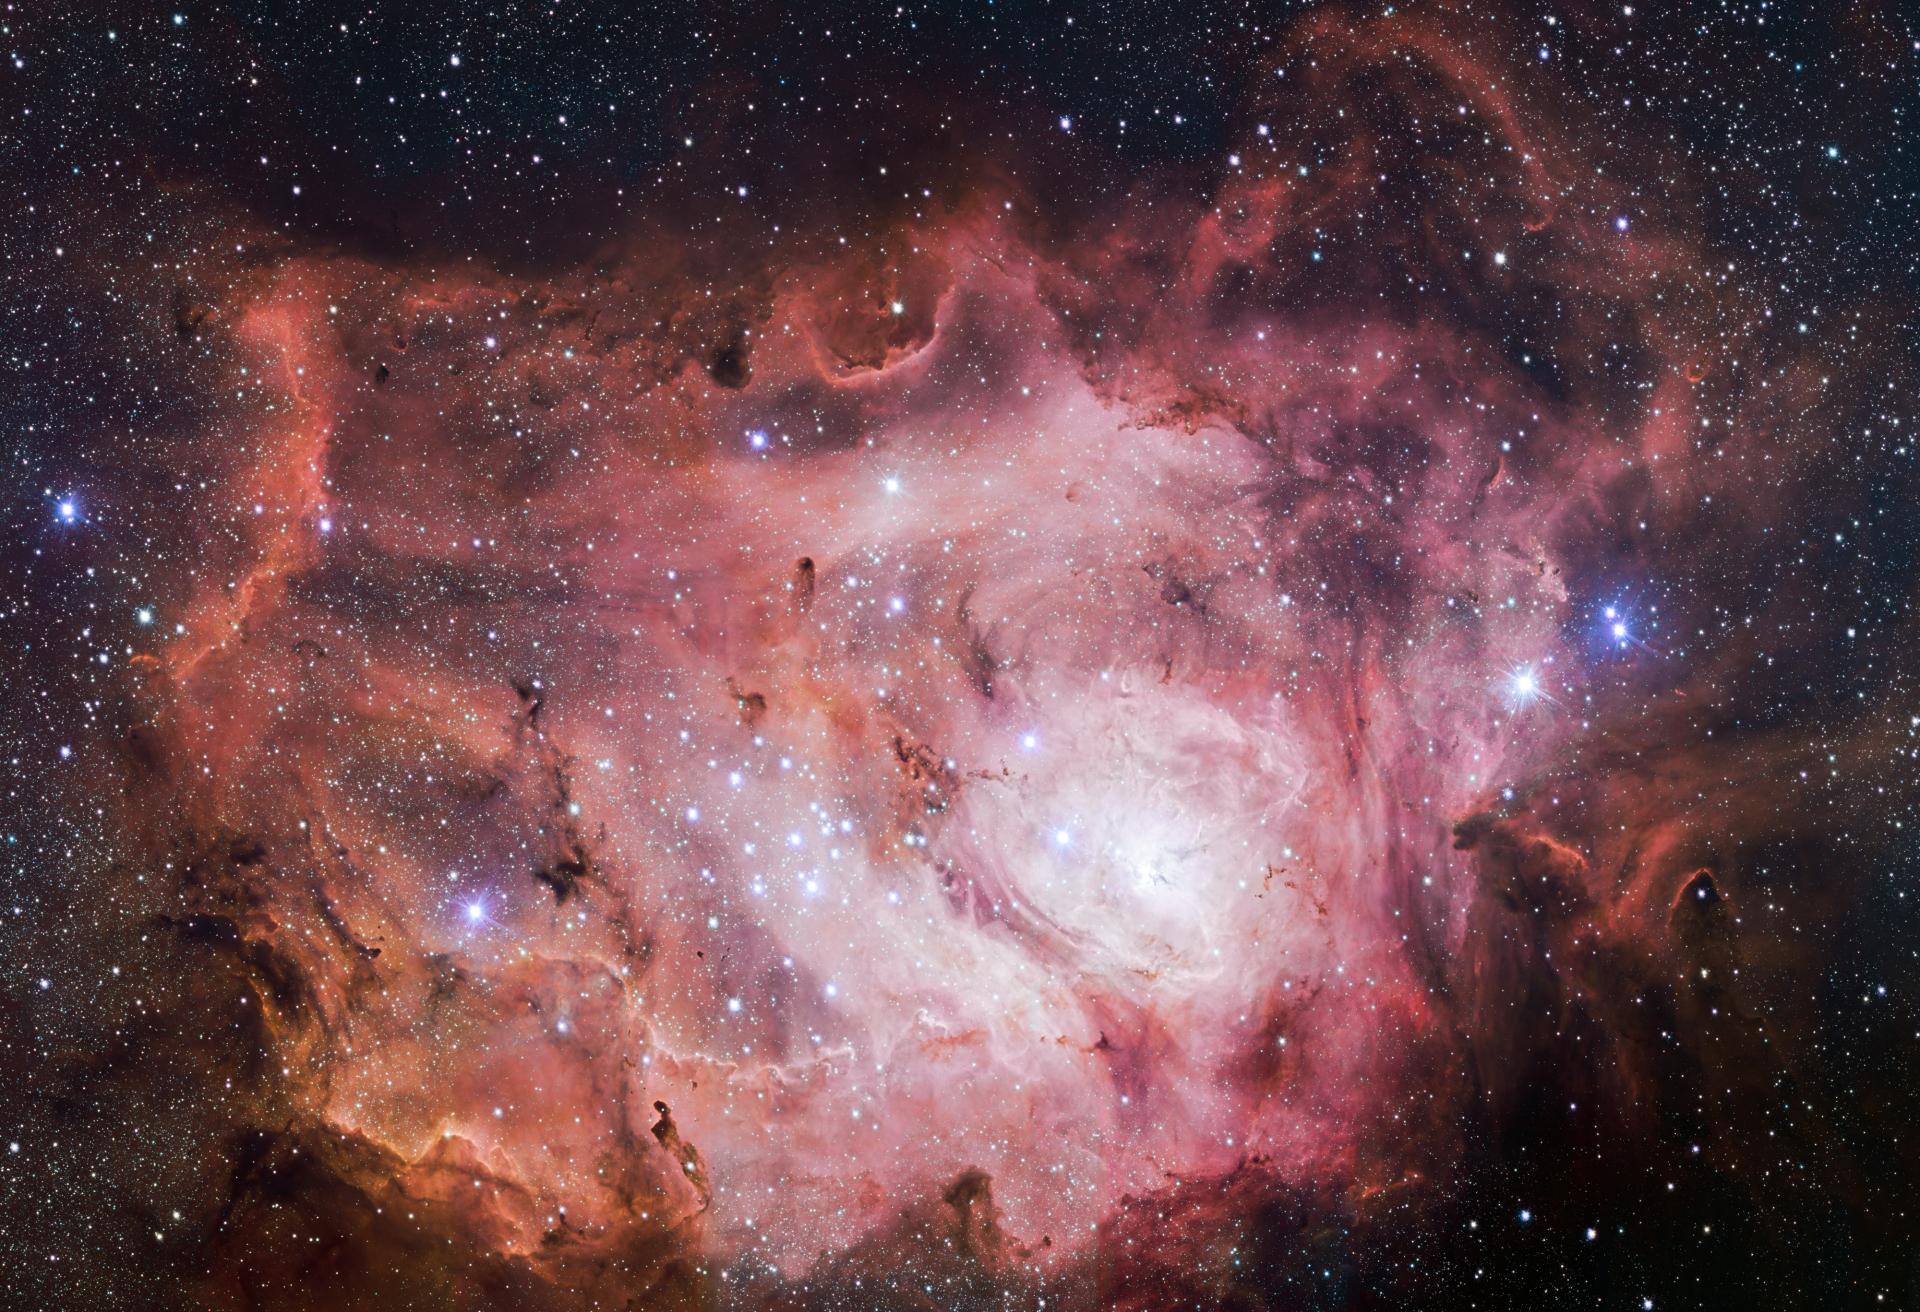 Lagoon Nebula photo by NASA